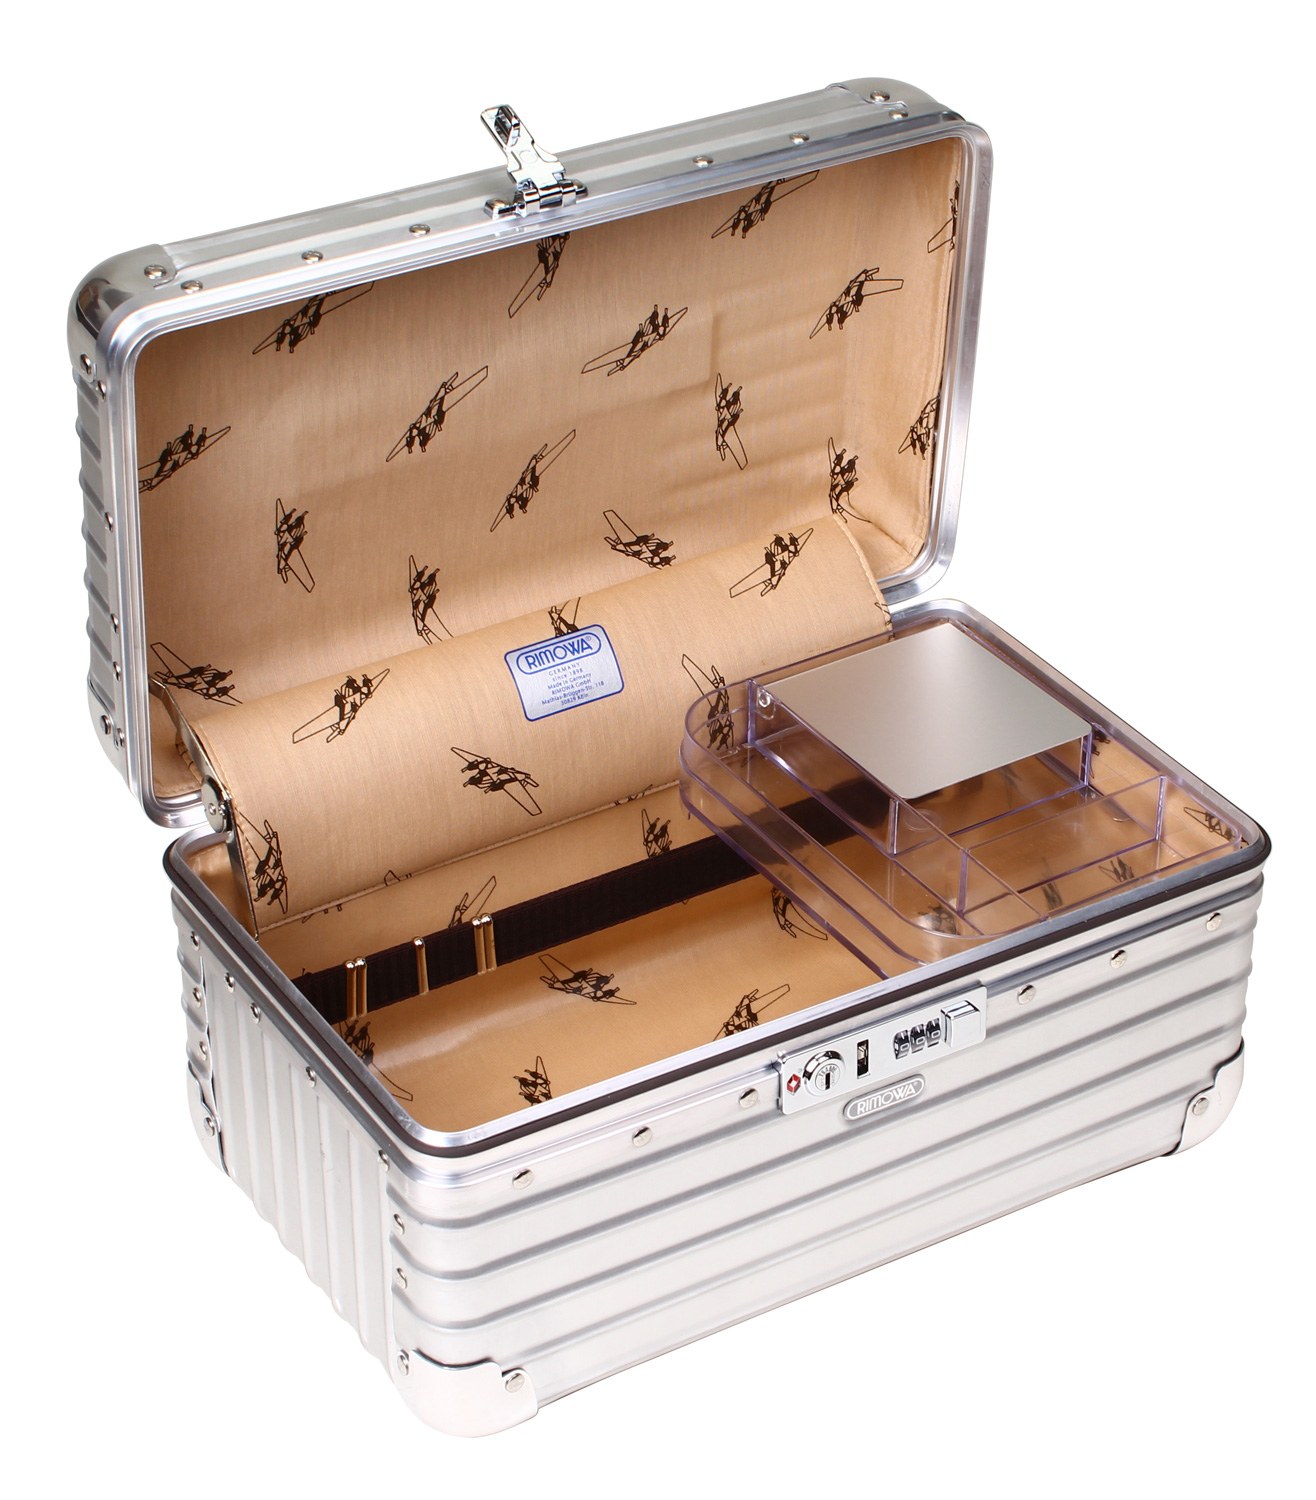 rimowa classic flight beauty case